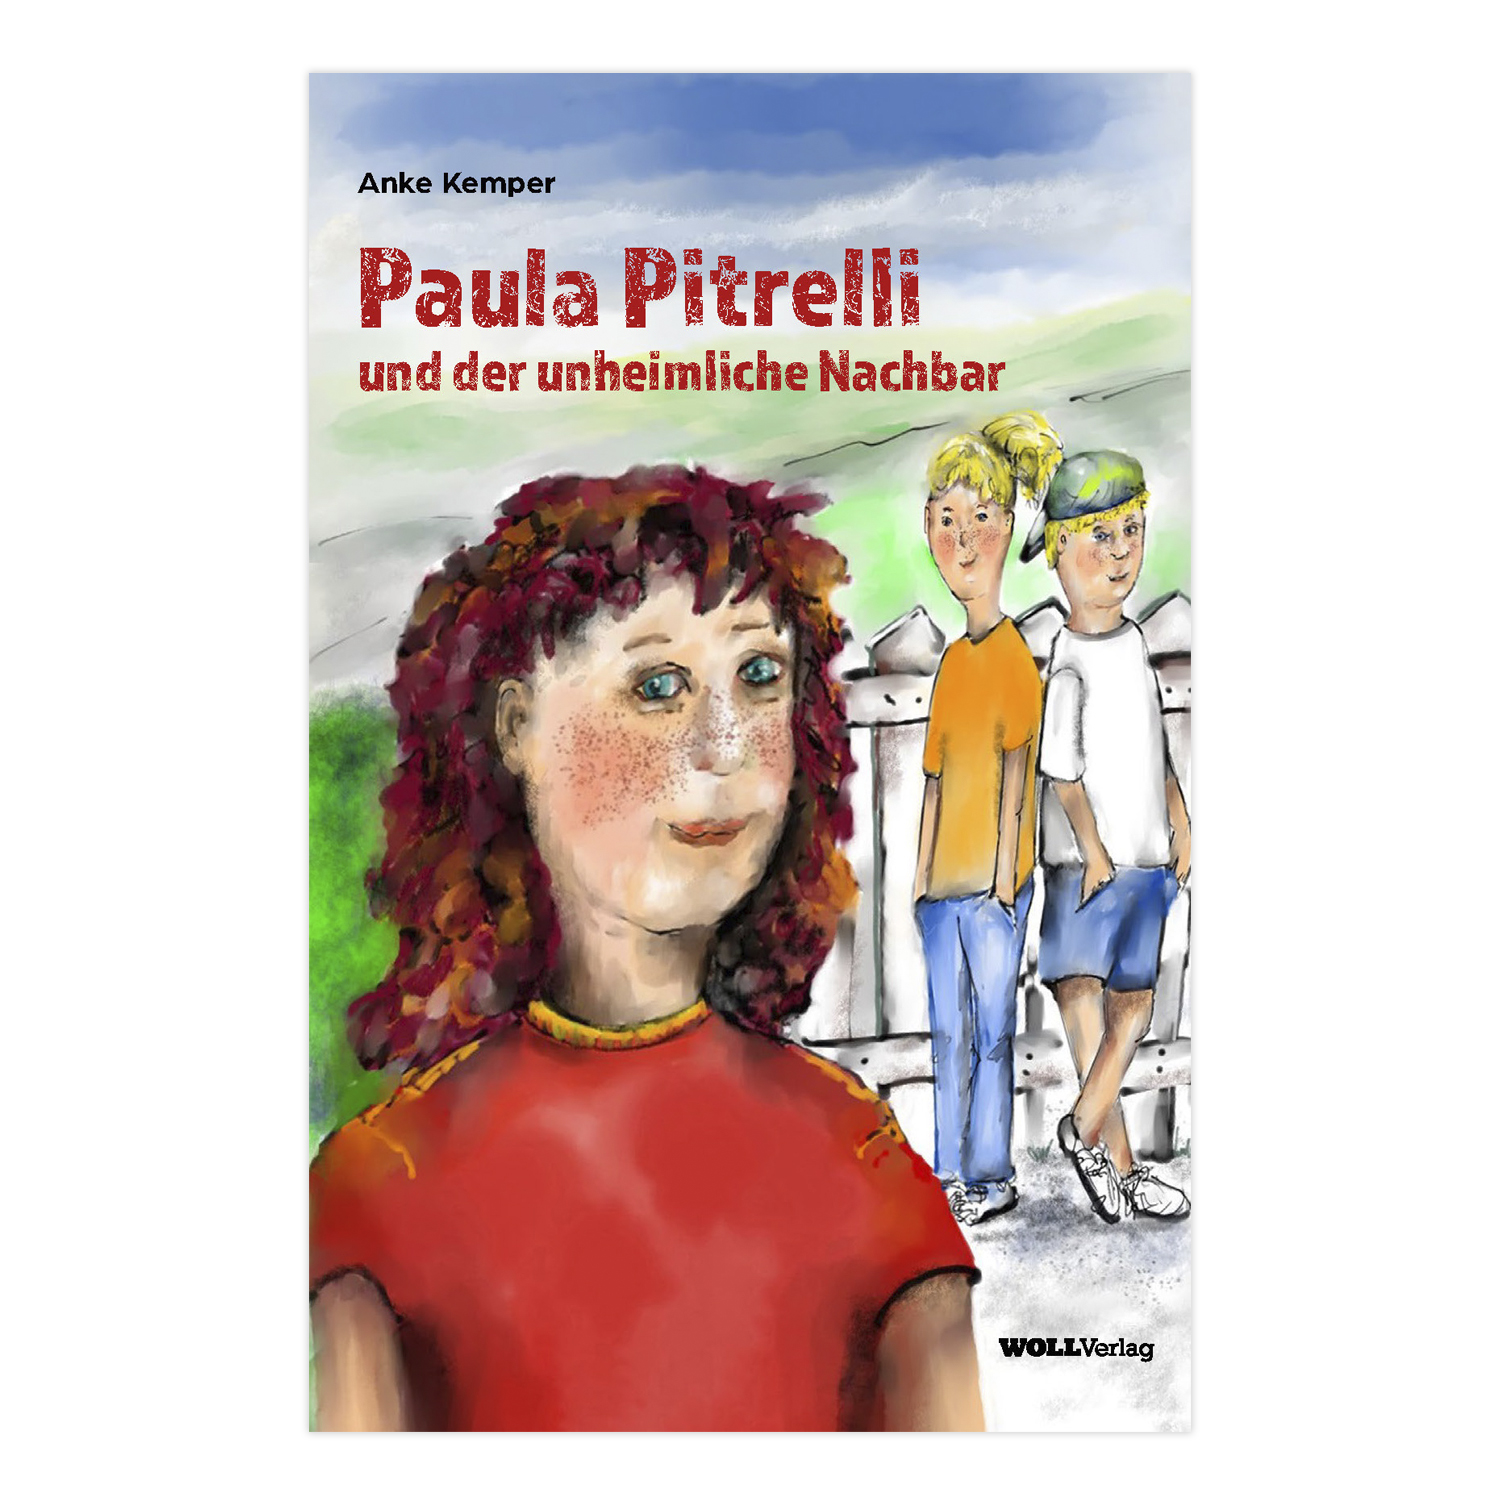 Paula Pitrelli und der unheimliche Nachbar (Anke Kemper)